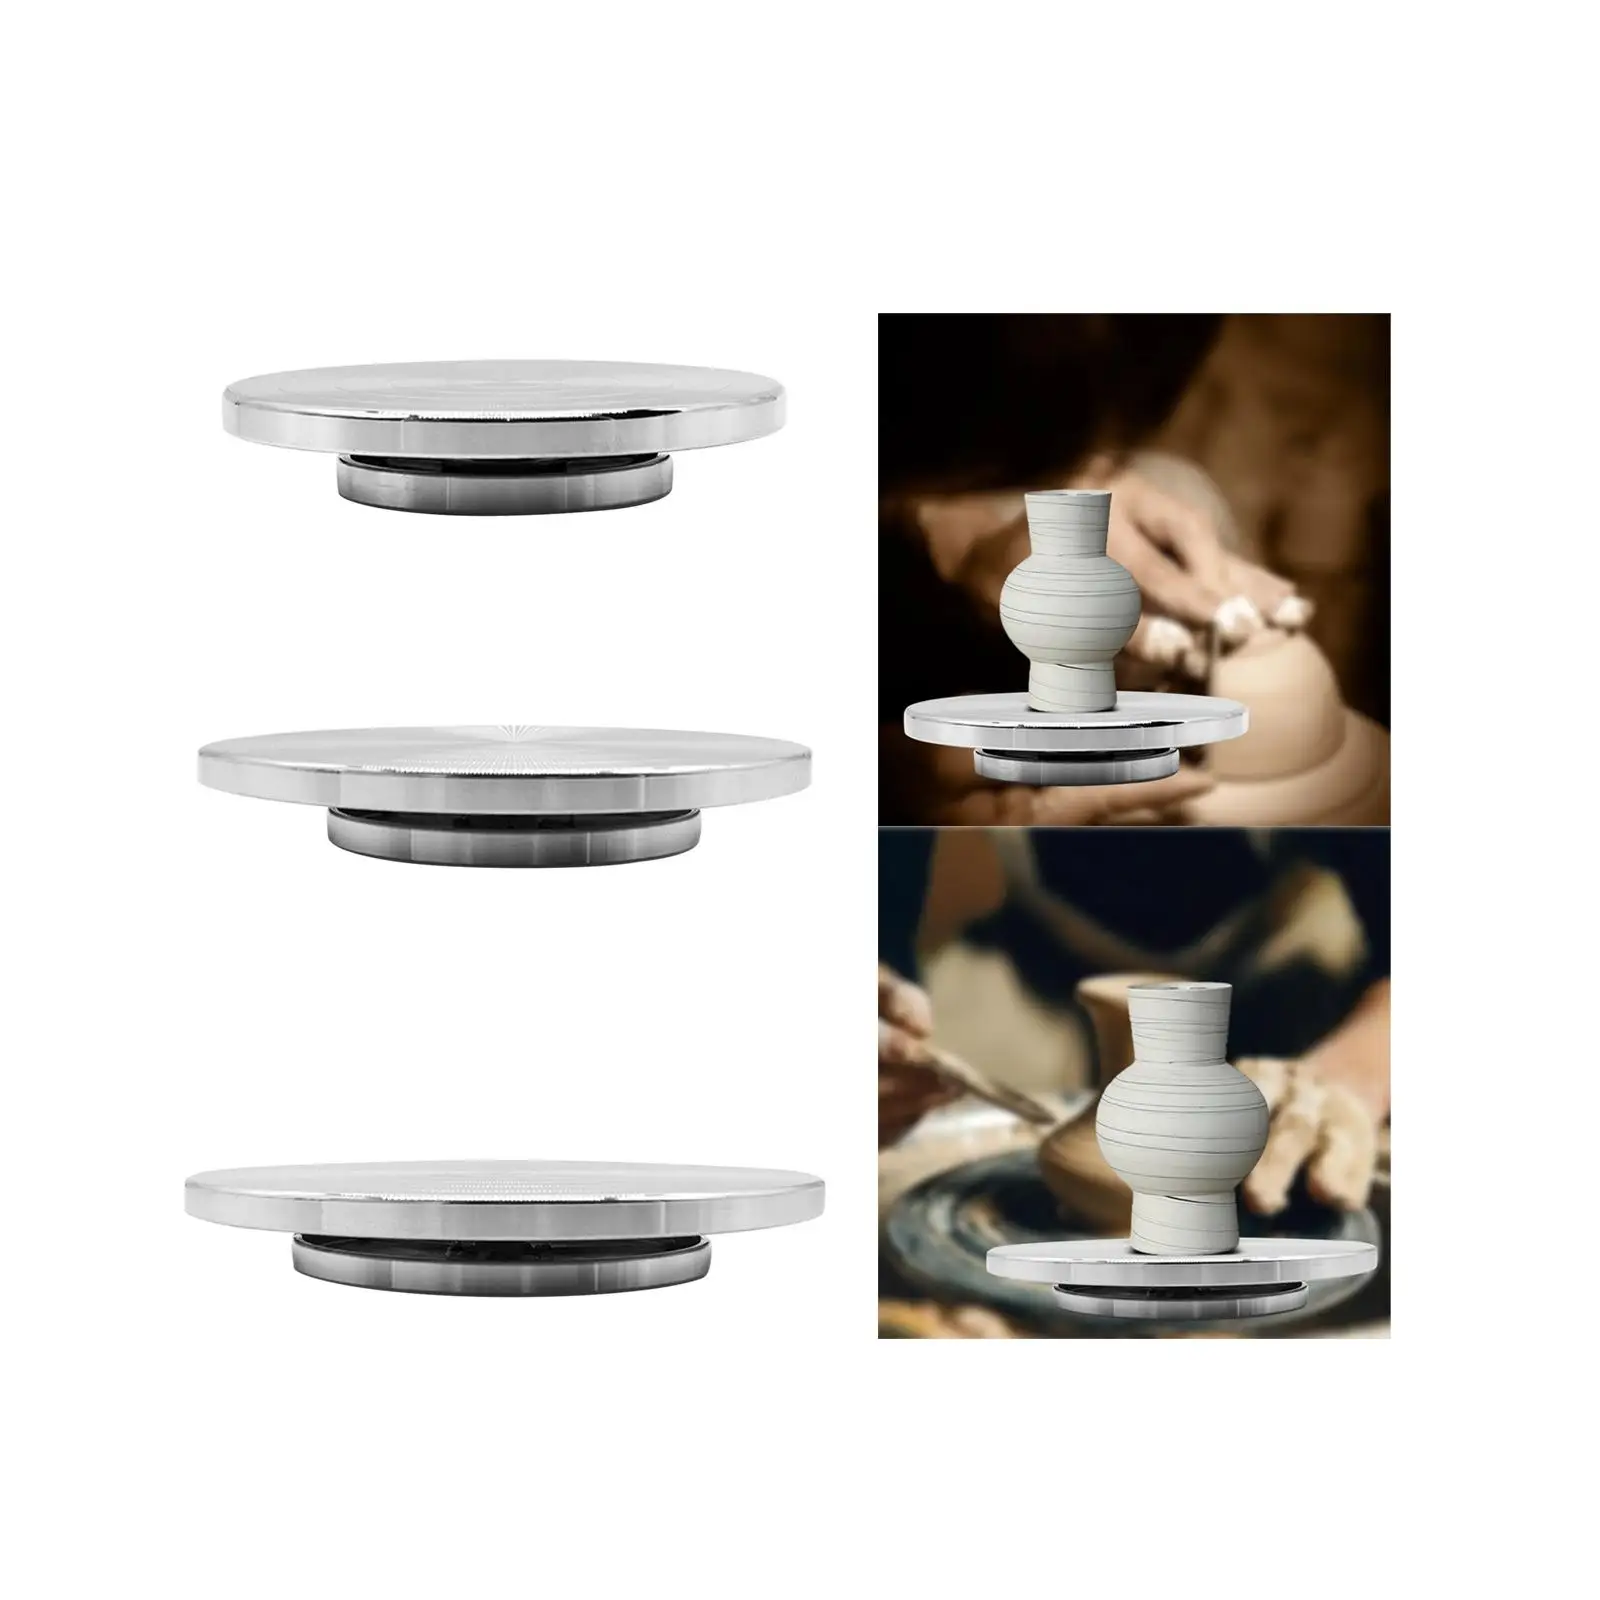 Sculpting Wheel Turntable Reusable Revolving Cake Turntable for Baking Cake Cream Decorating Crafting Ceramic Repair Modelling